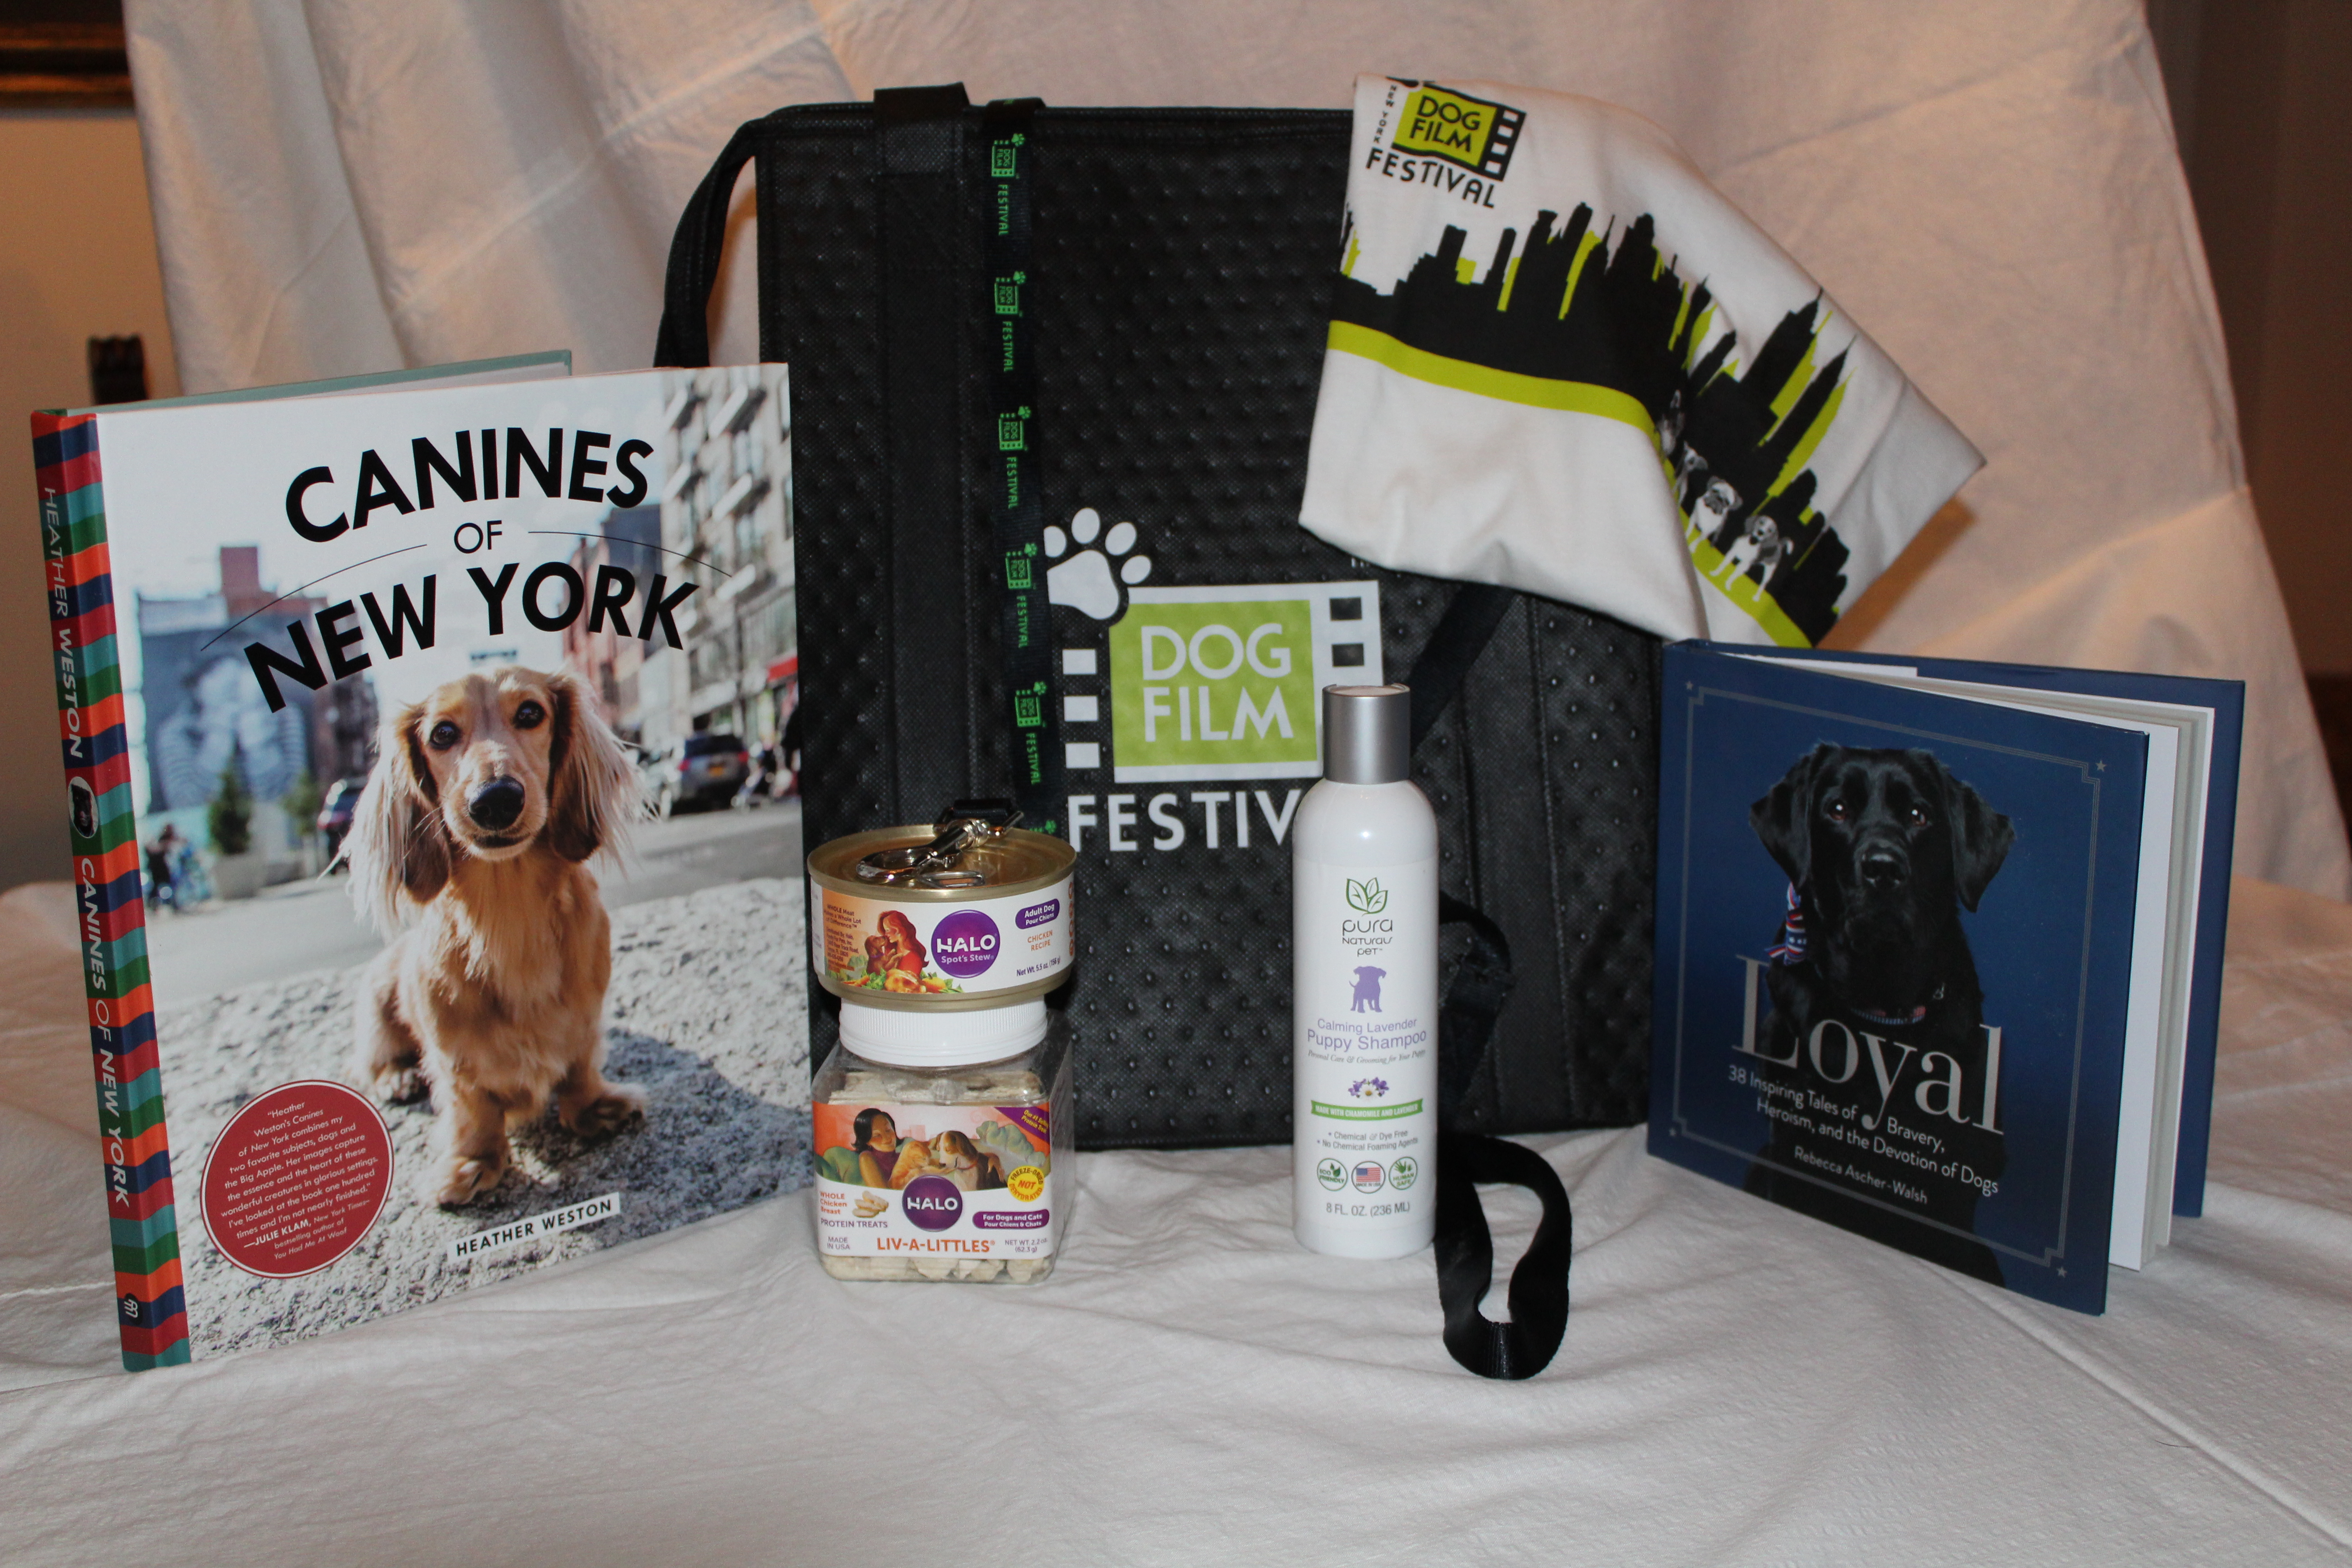 Goodie bag for Dog Film Festival